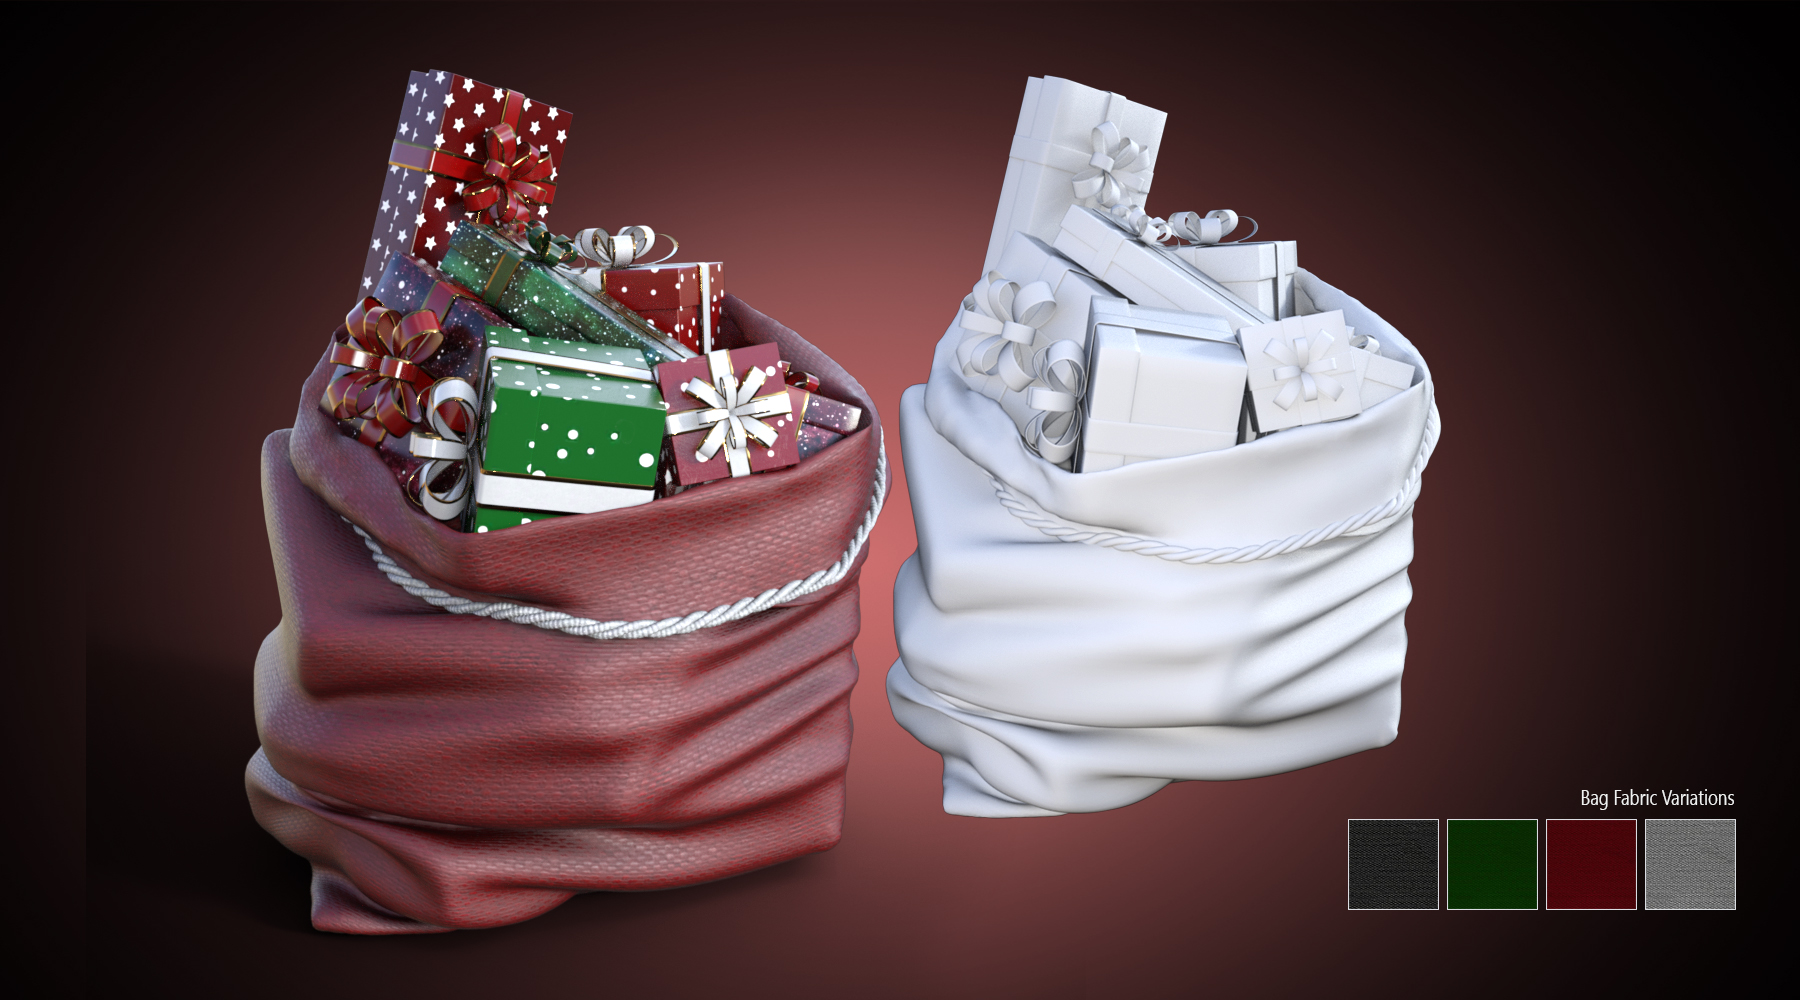 Santa's Bag With Gifts by: B.E.T.T.Y, 3D Models by Daz 3D